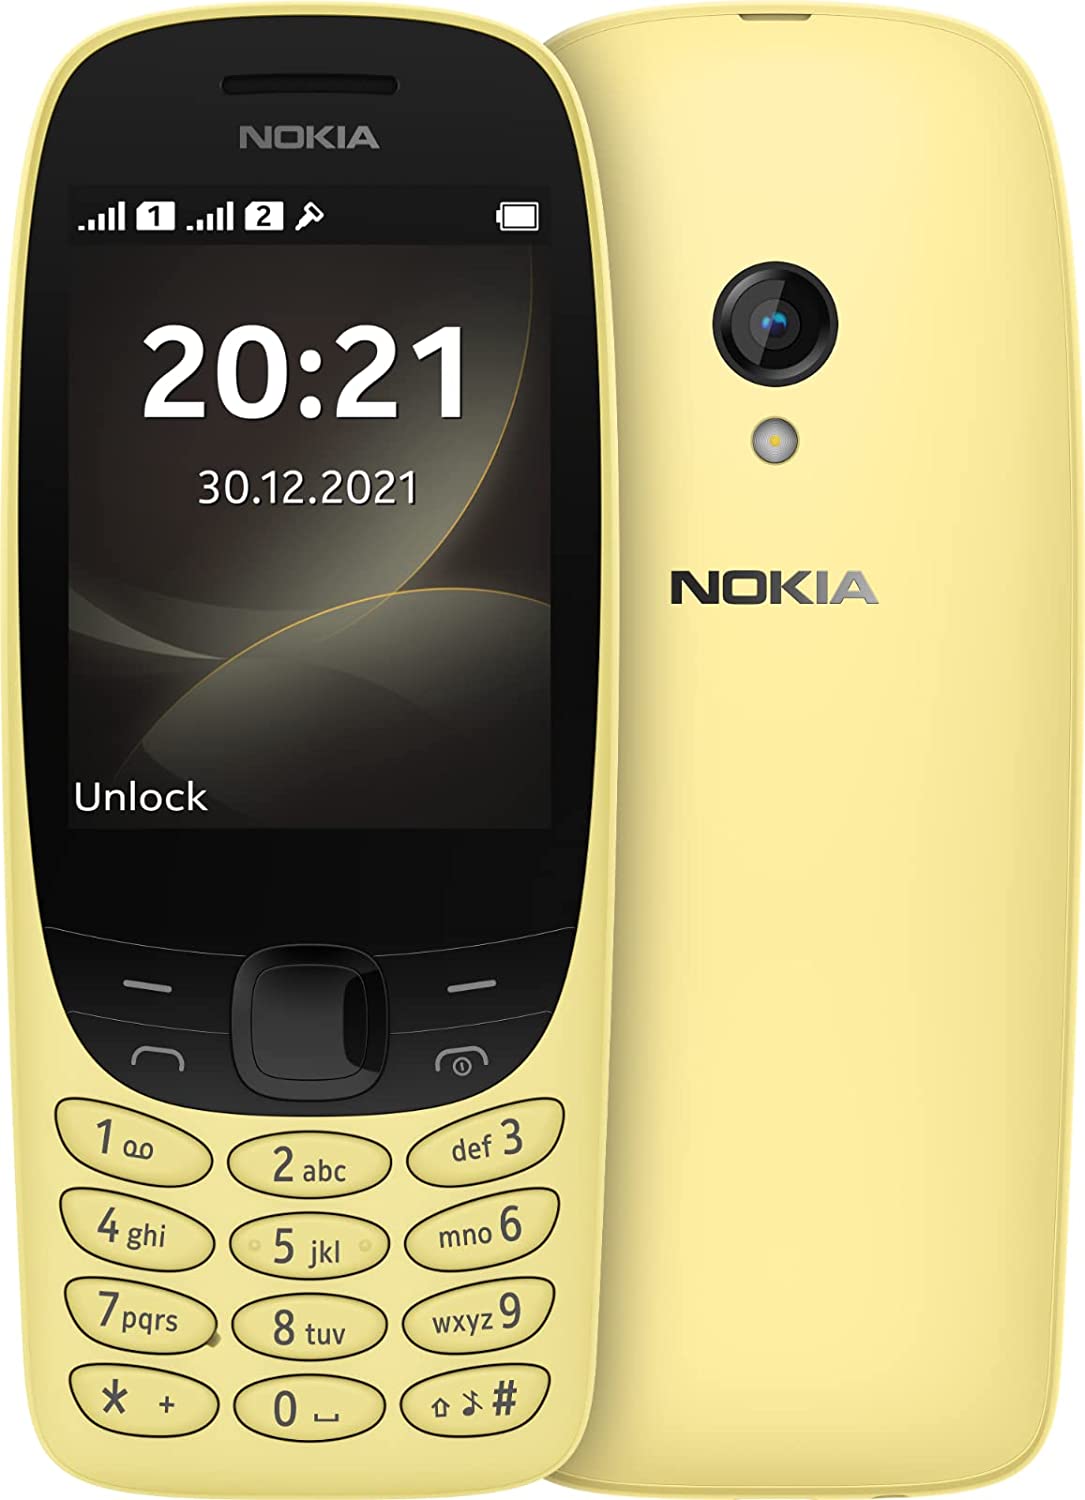 Nokia 6310 (2021) Dual-SIM 16MB ROM + 8MB RAM